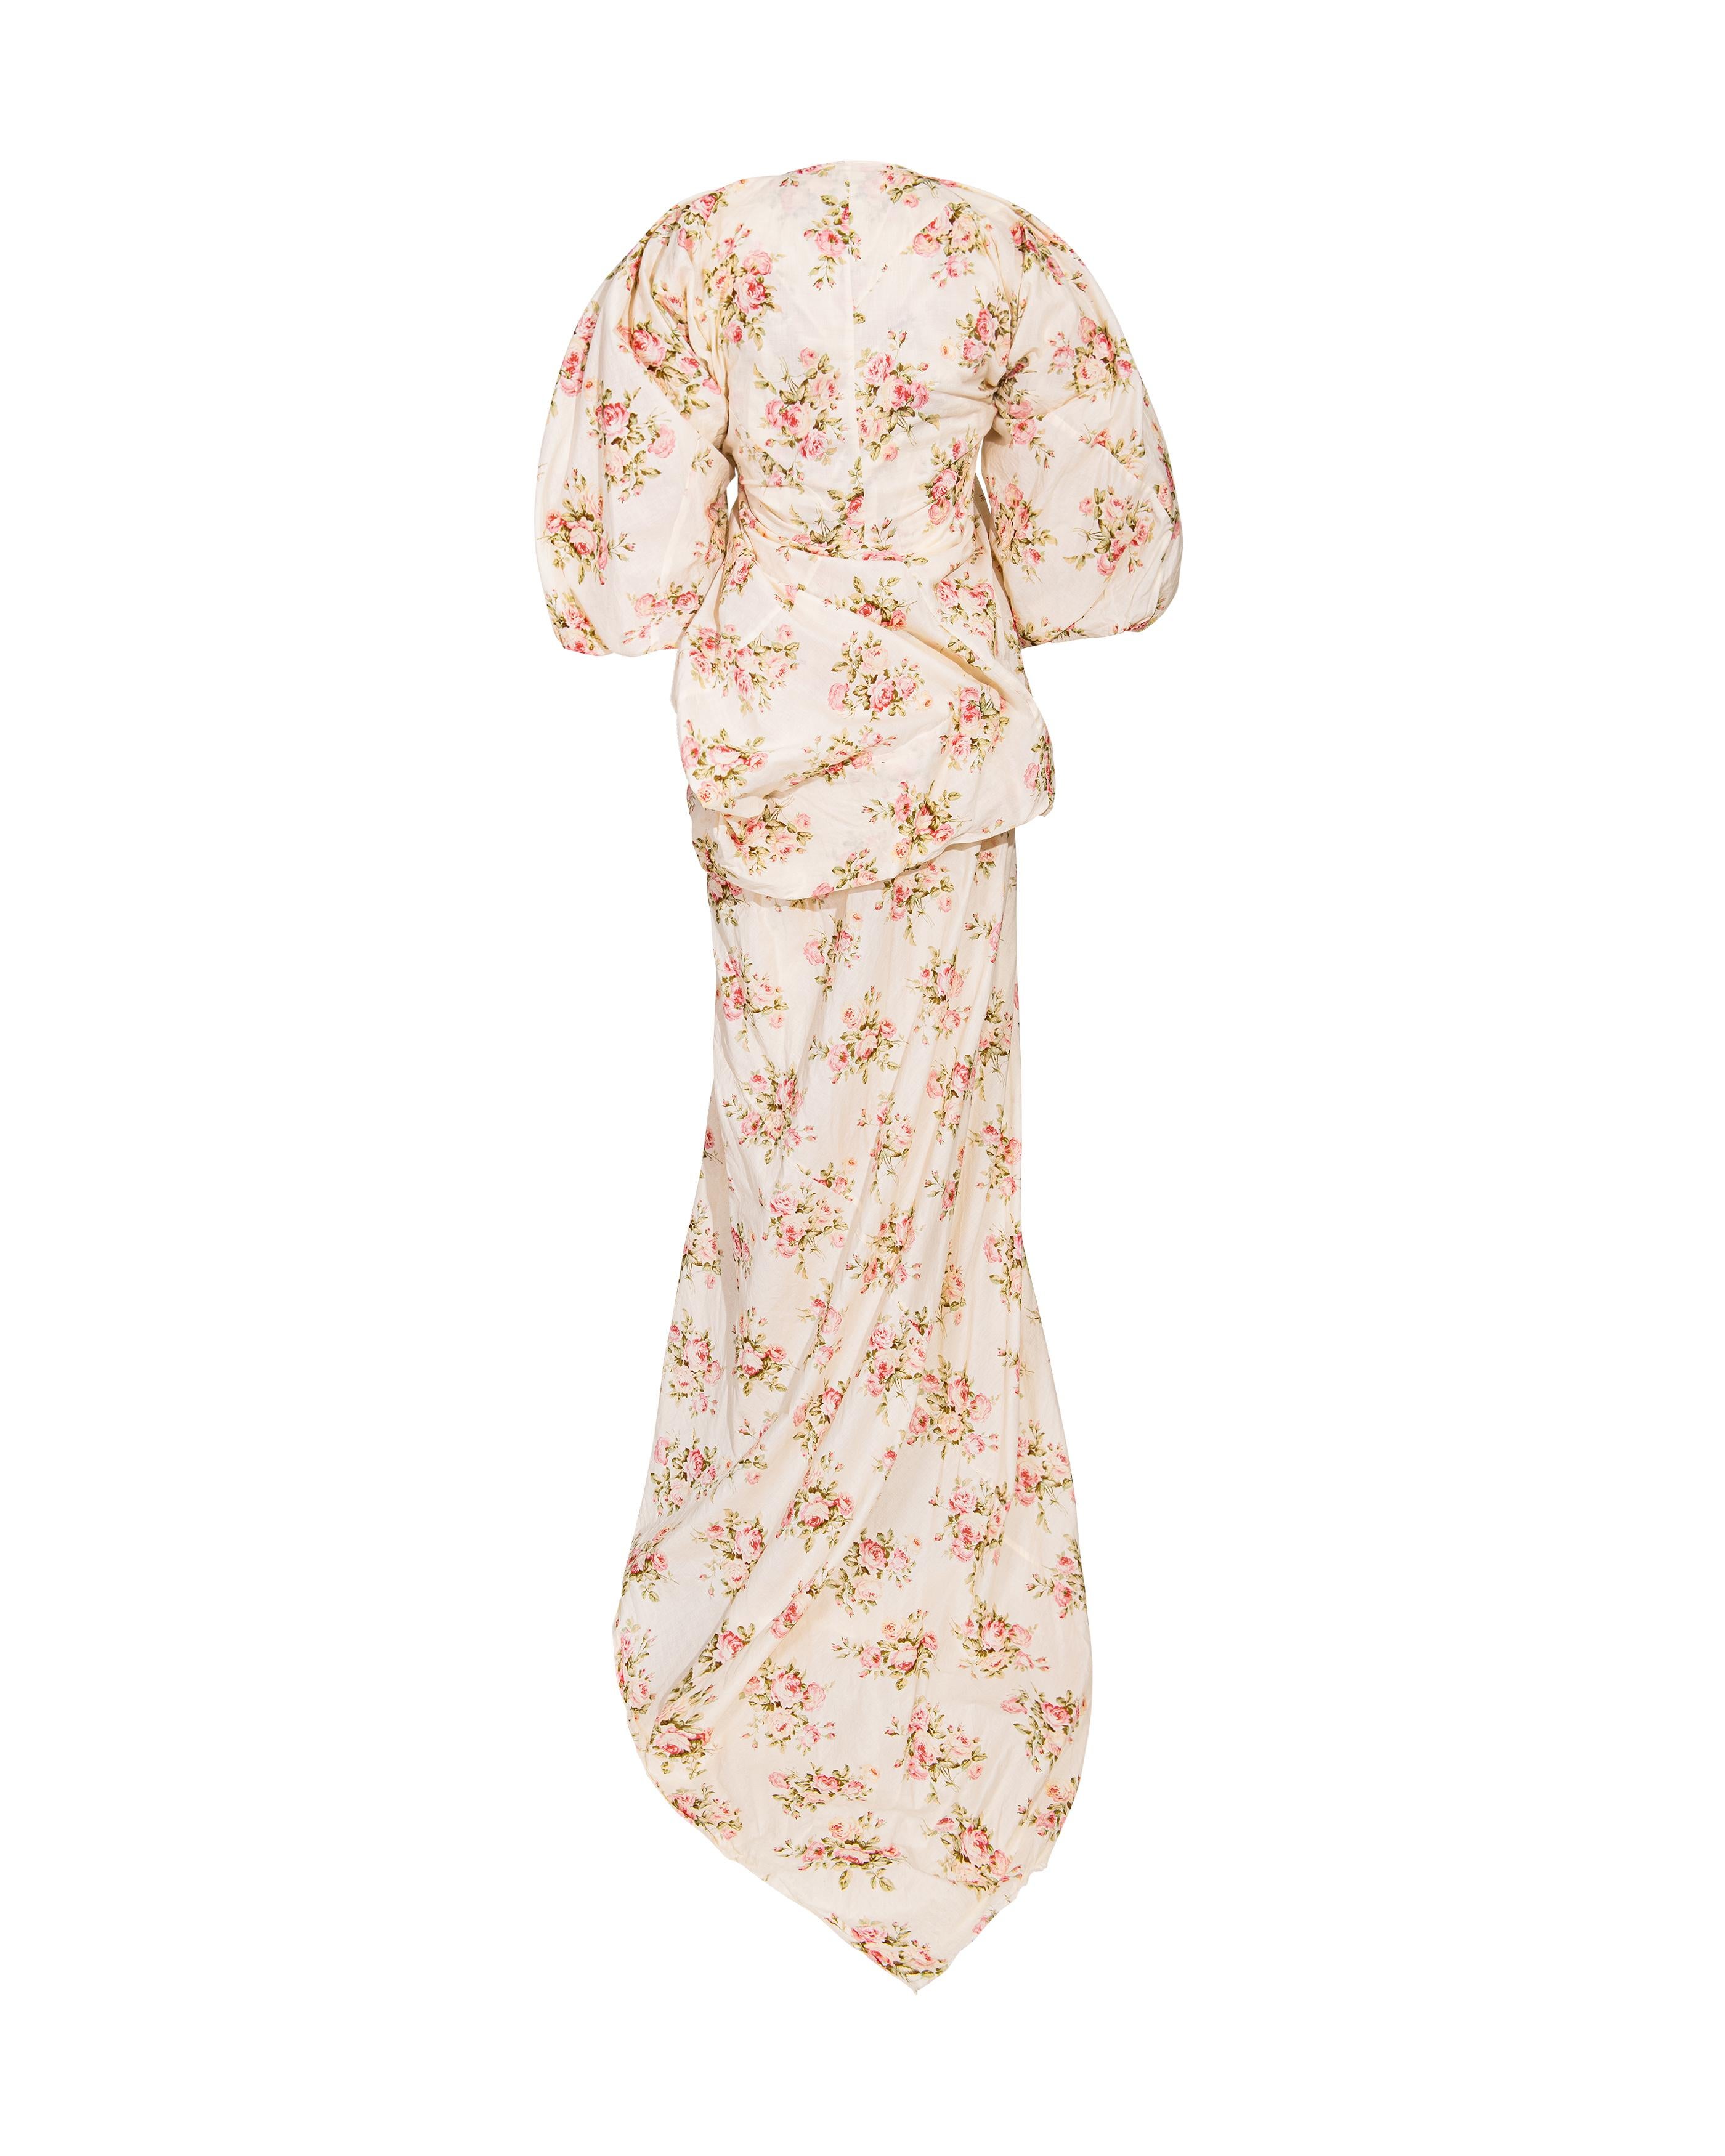 S/S 2008 Junya Watanabe Ecru Cotton Dress with Pink Floral Pattern 2